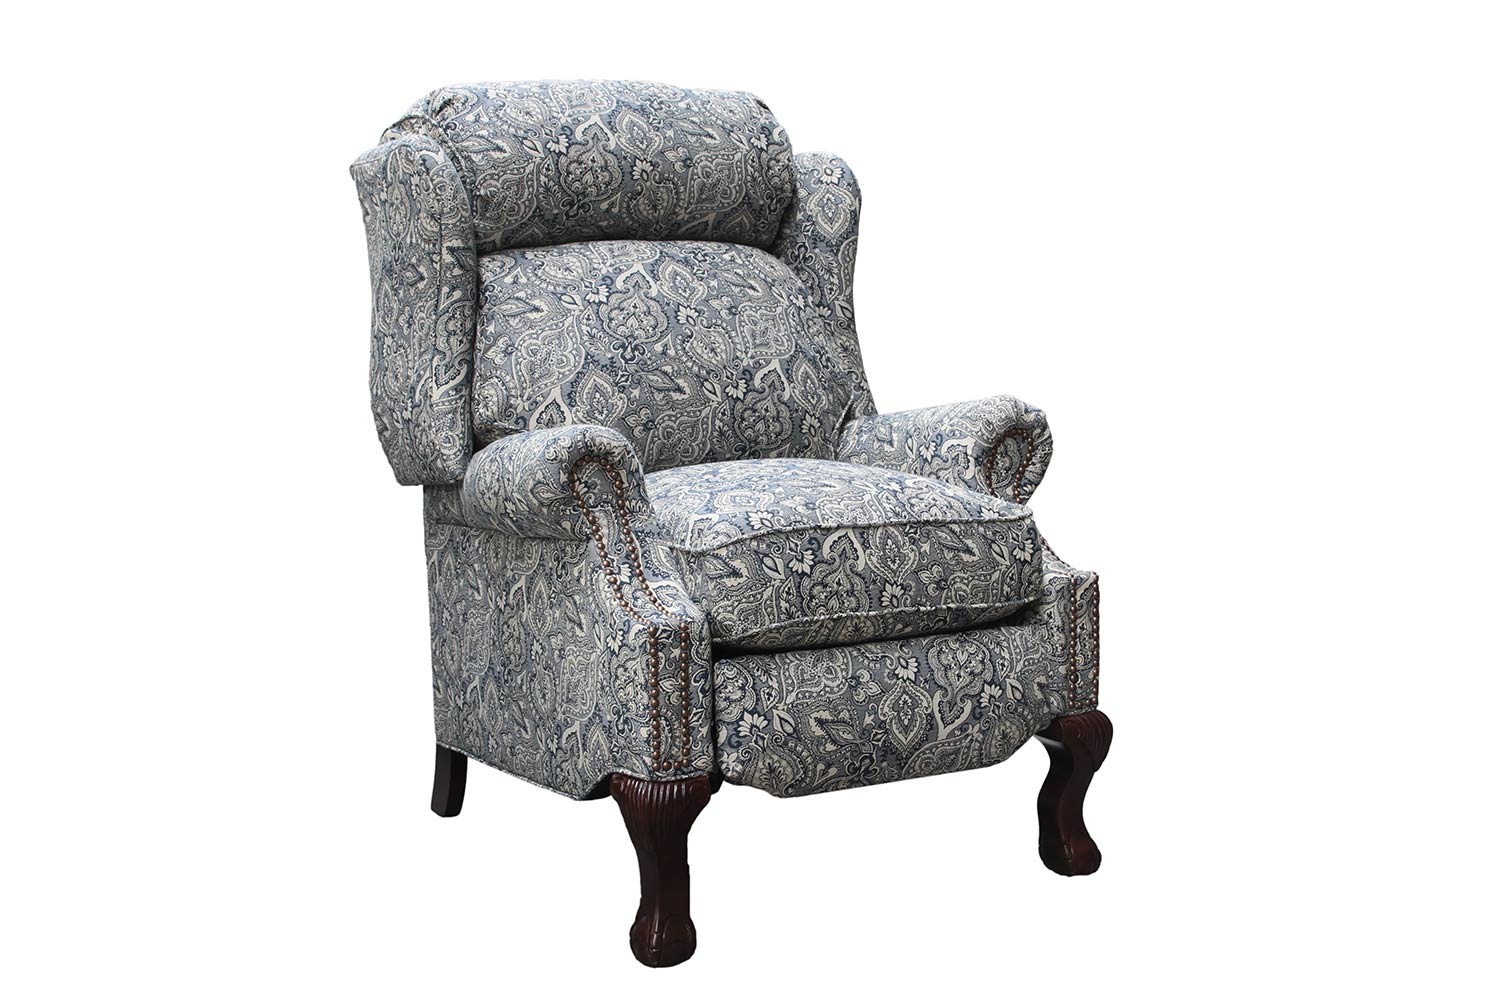 Barcalounger Danbury Recliner Chair - Rustic Cobalt fabric